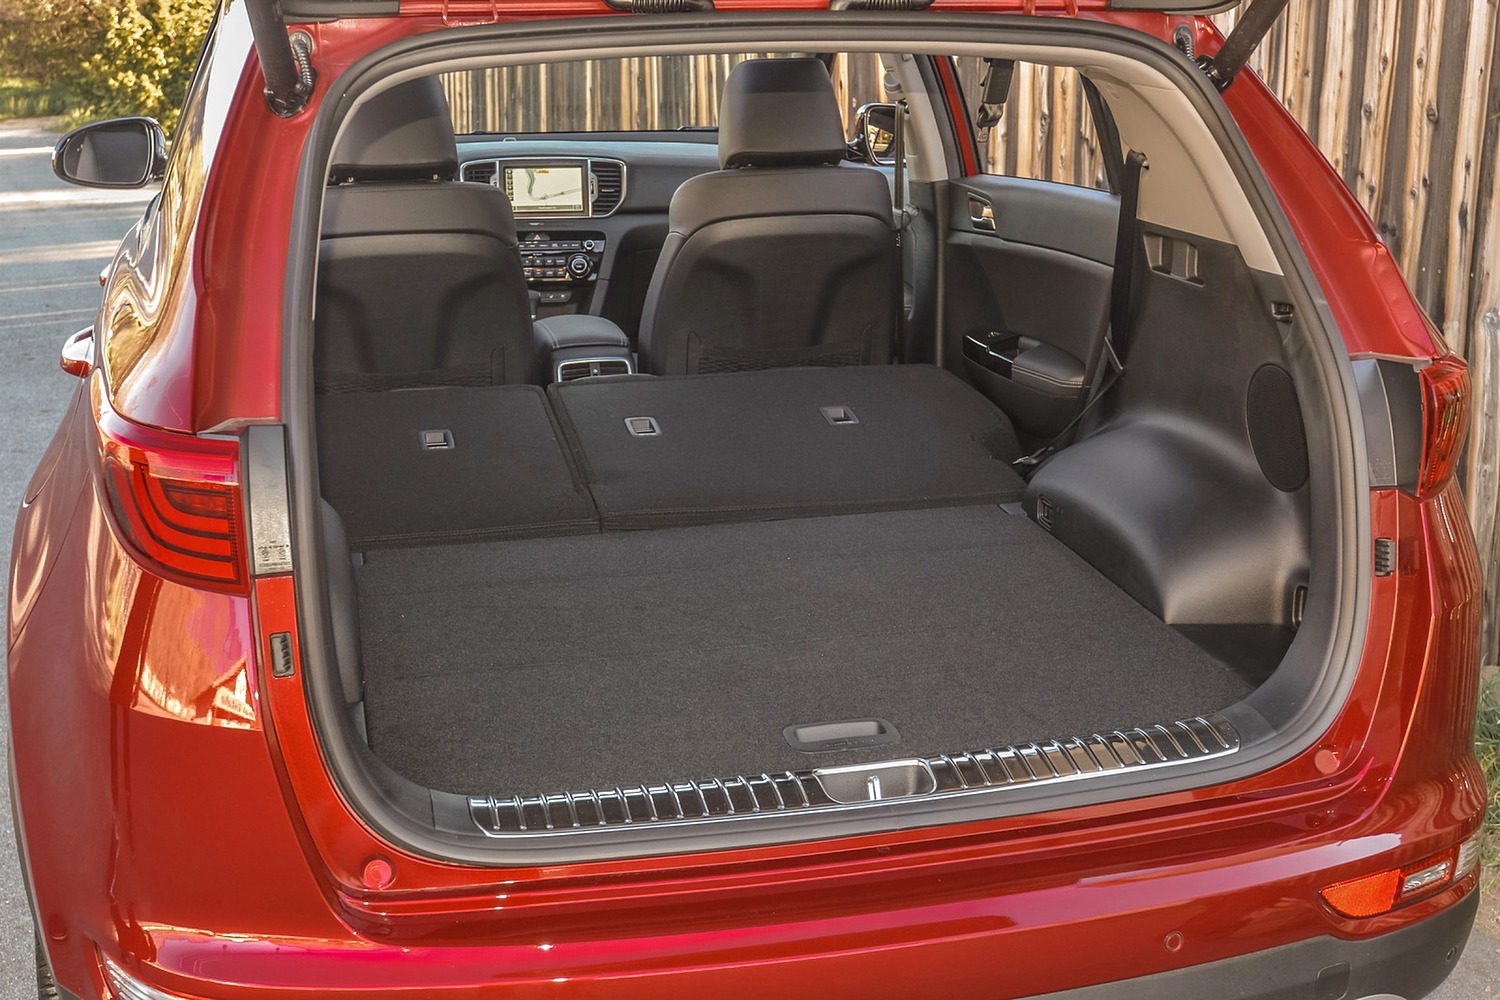 2017 Kia Sportage SX 4dr SUV Interior